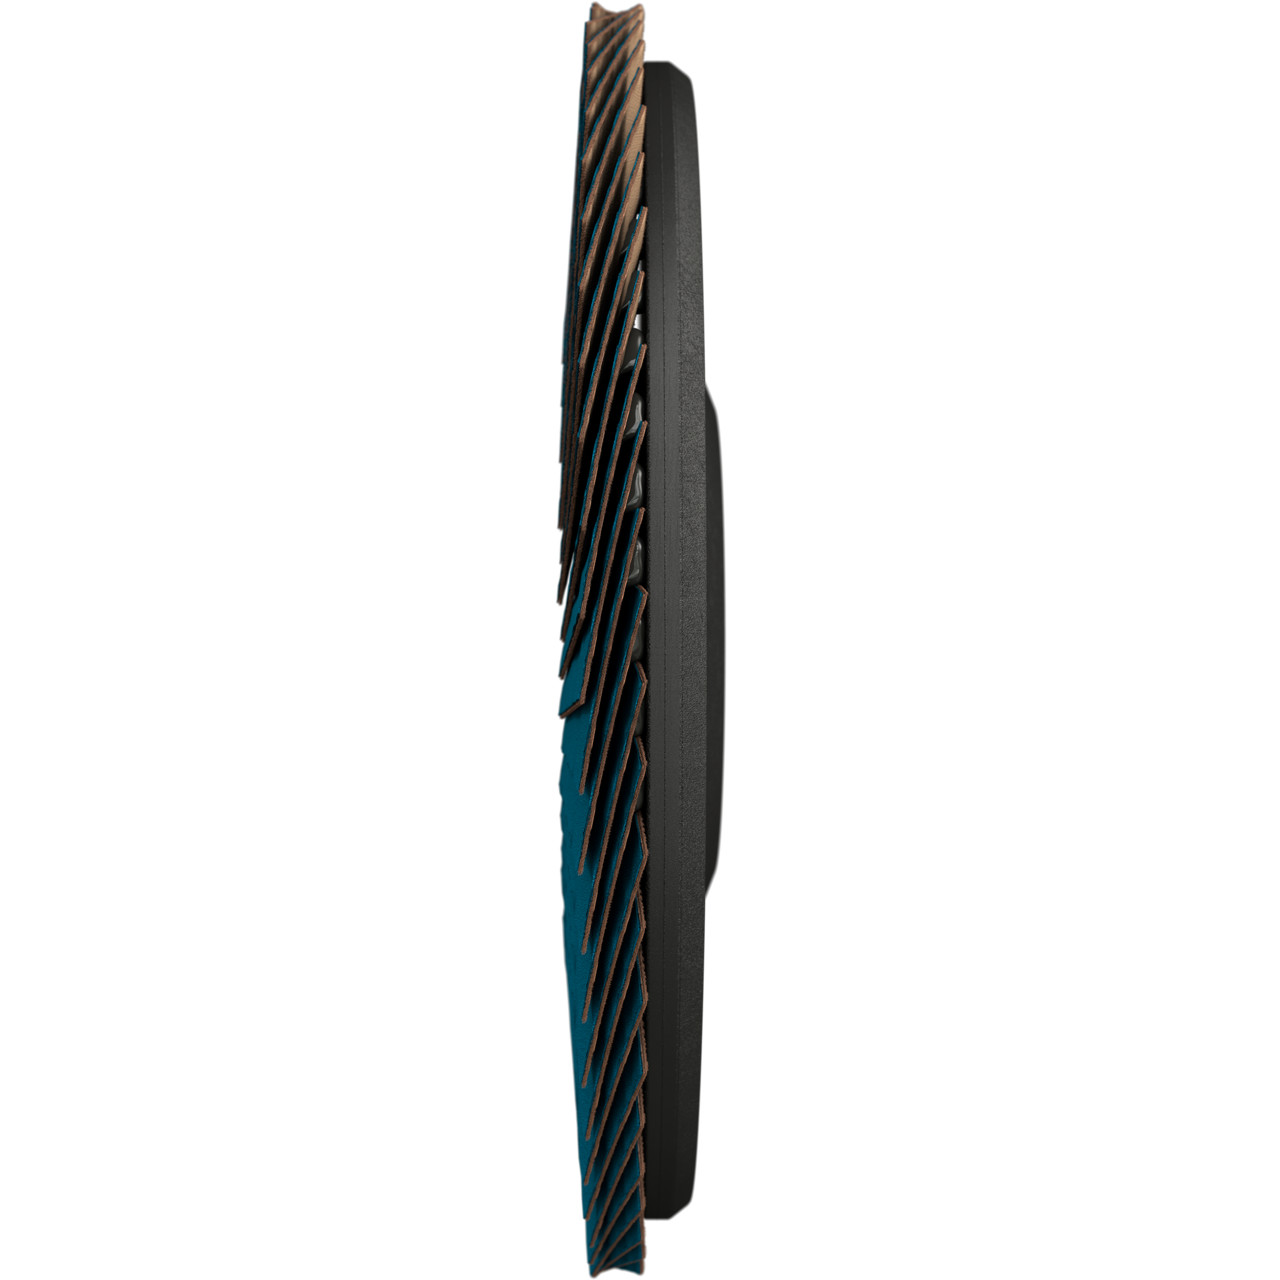 TYROLIT Fächerscheibe DxH 178x22,23 LONGLIFE für Stahl, P60, Form: 28N - gerade Ausführung (Kunststoffträgerkörper), Art. 34063403